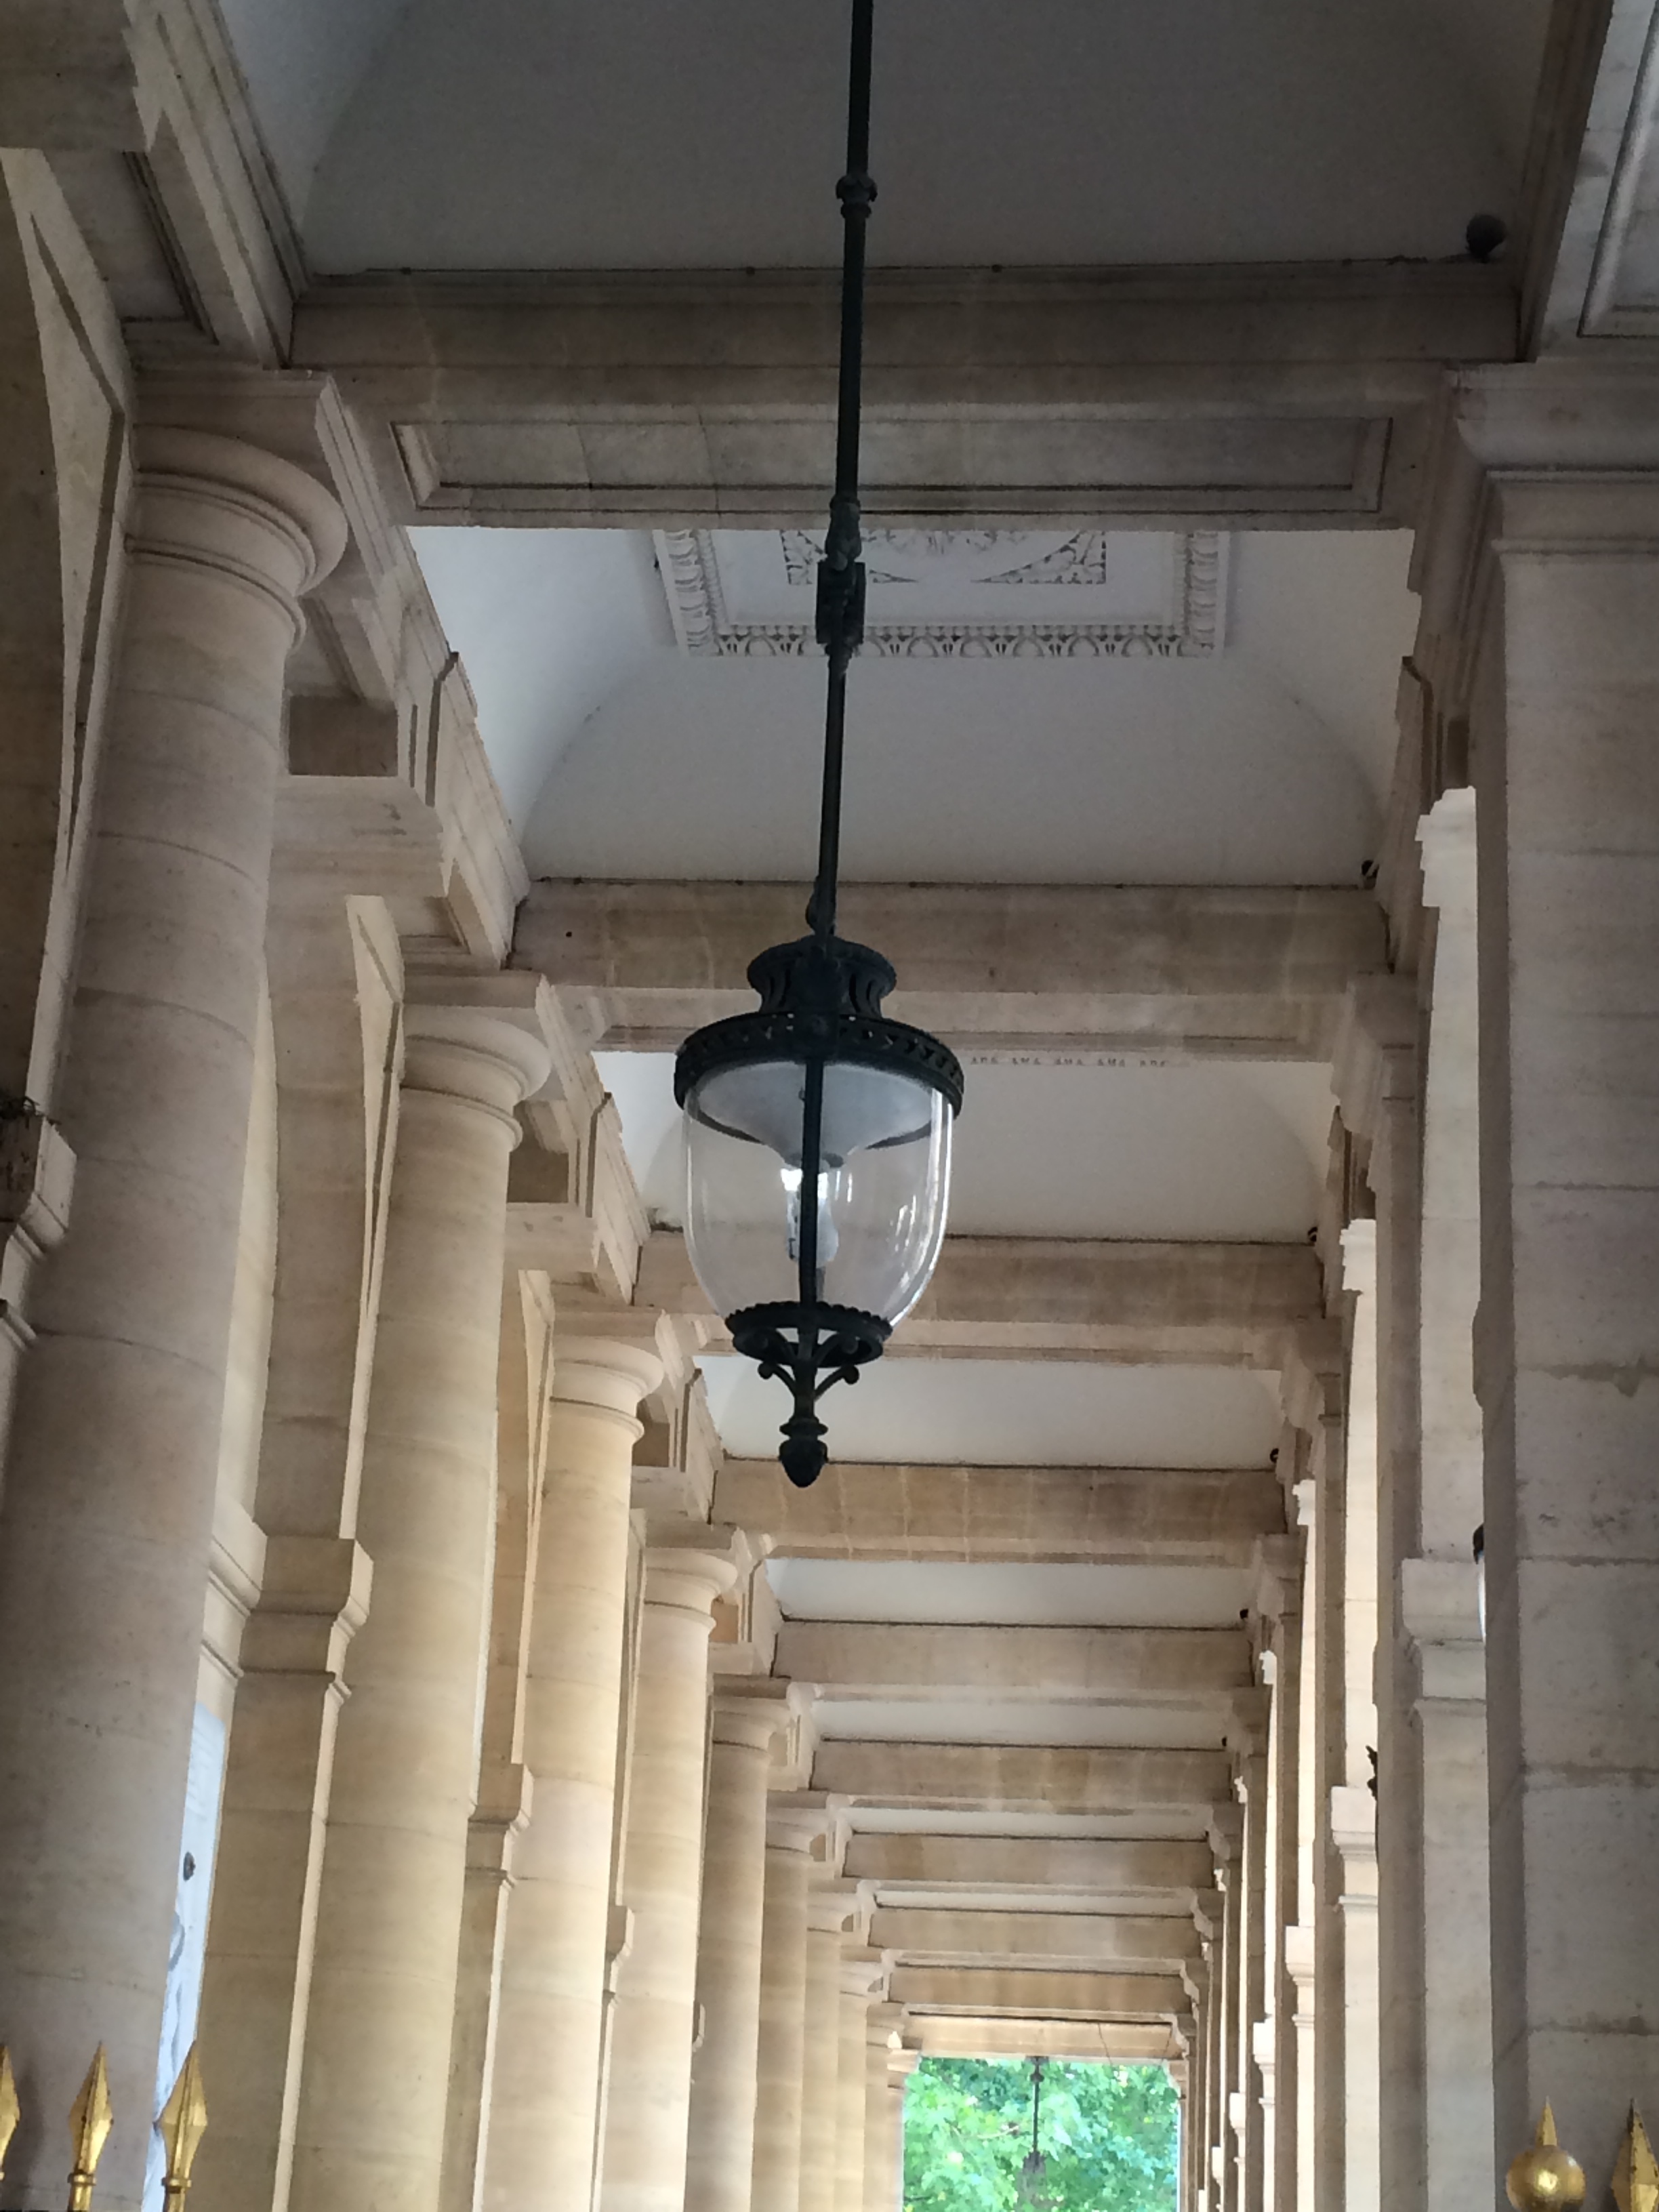 Galerie du Palais Royal